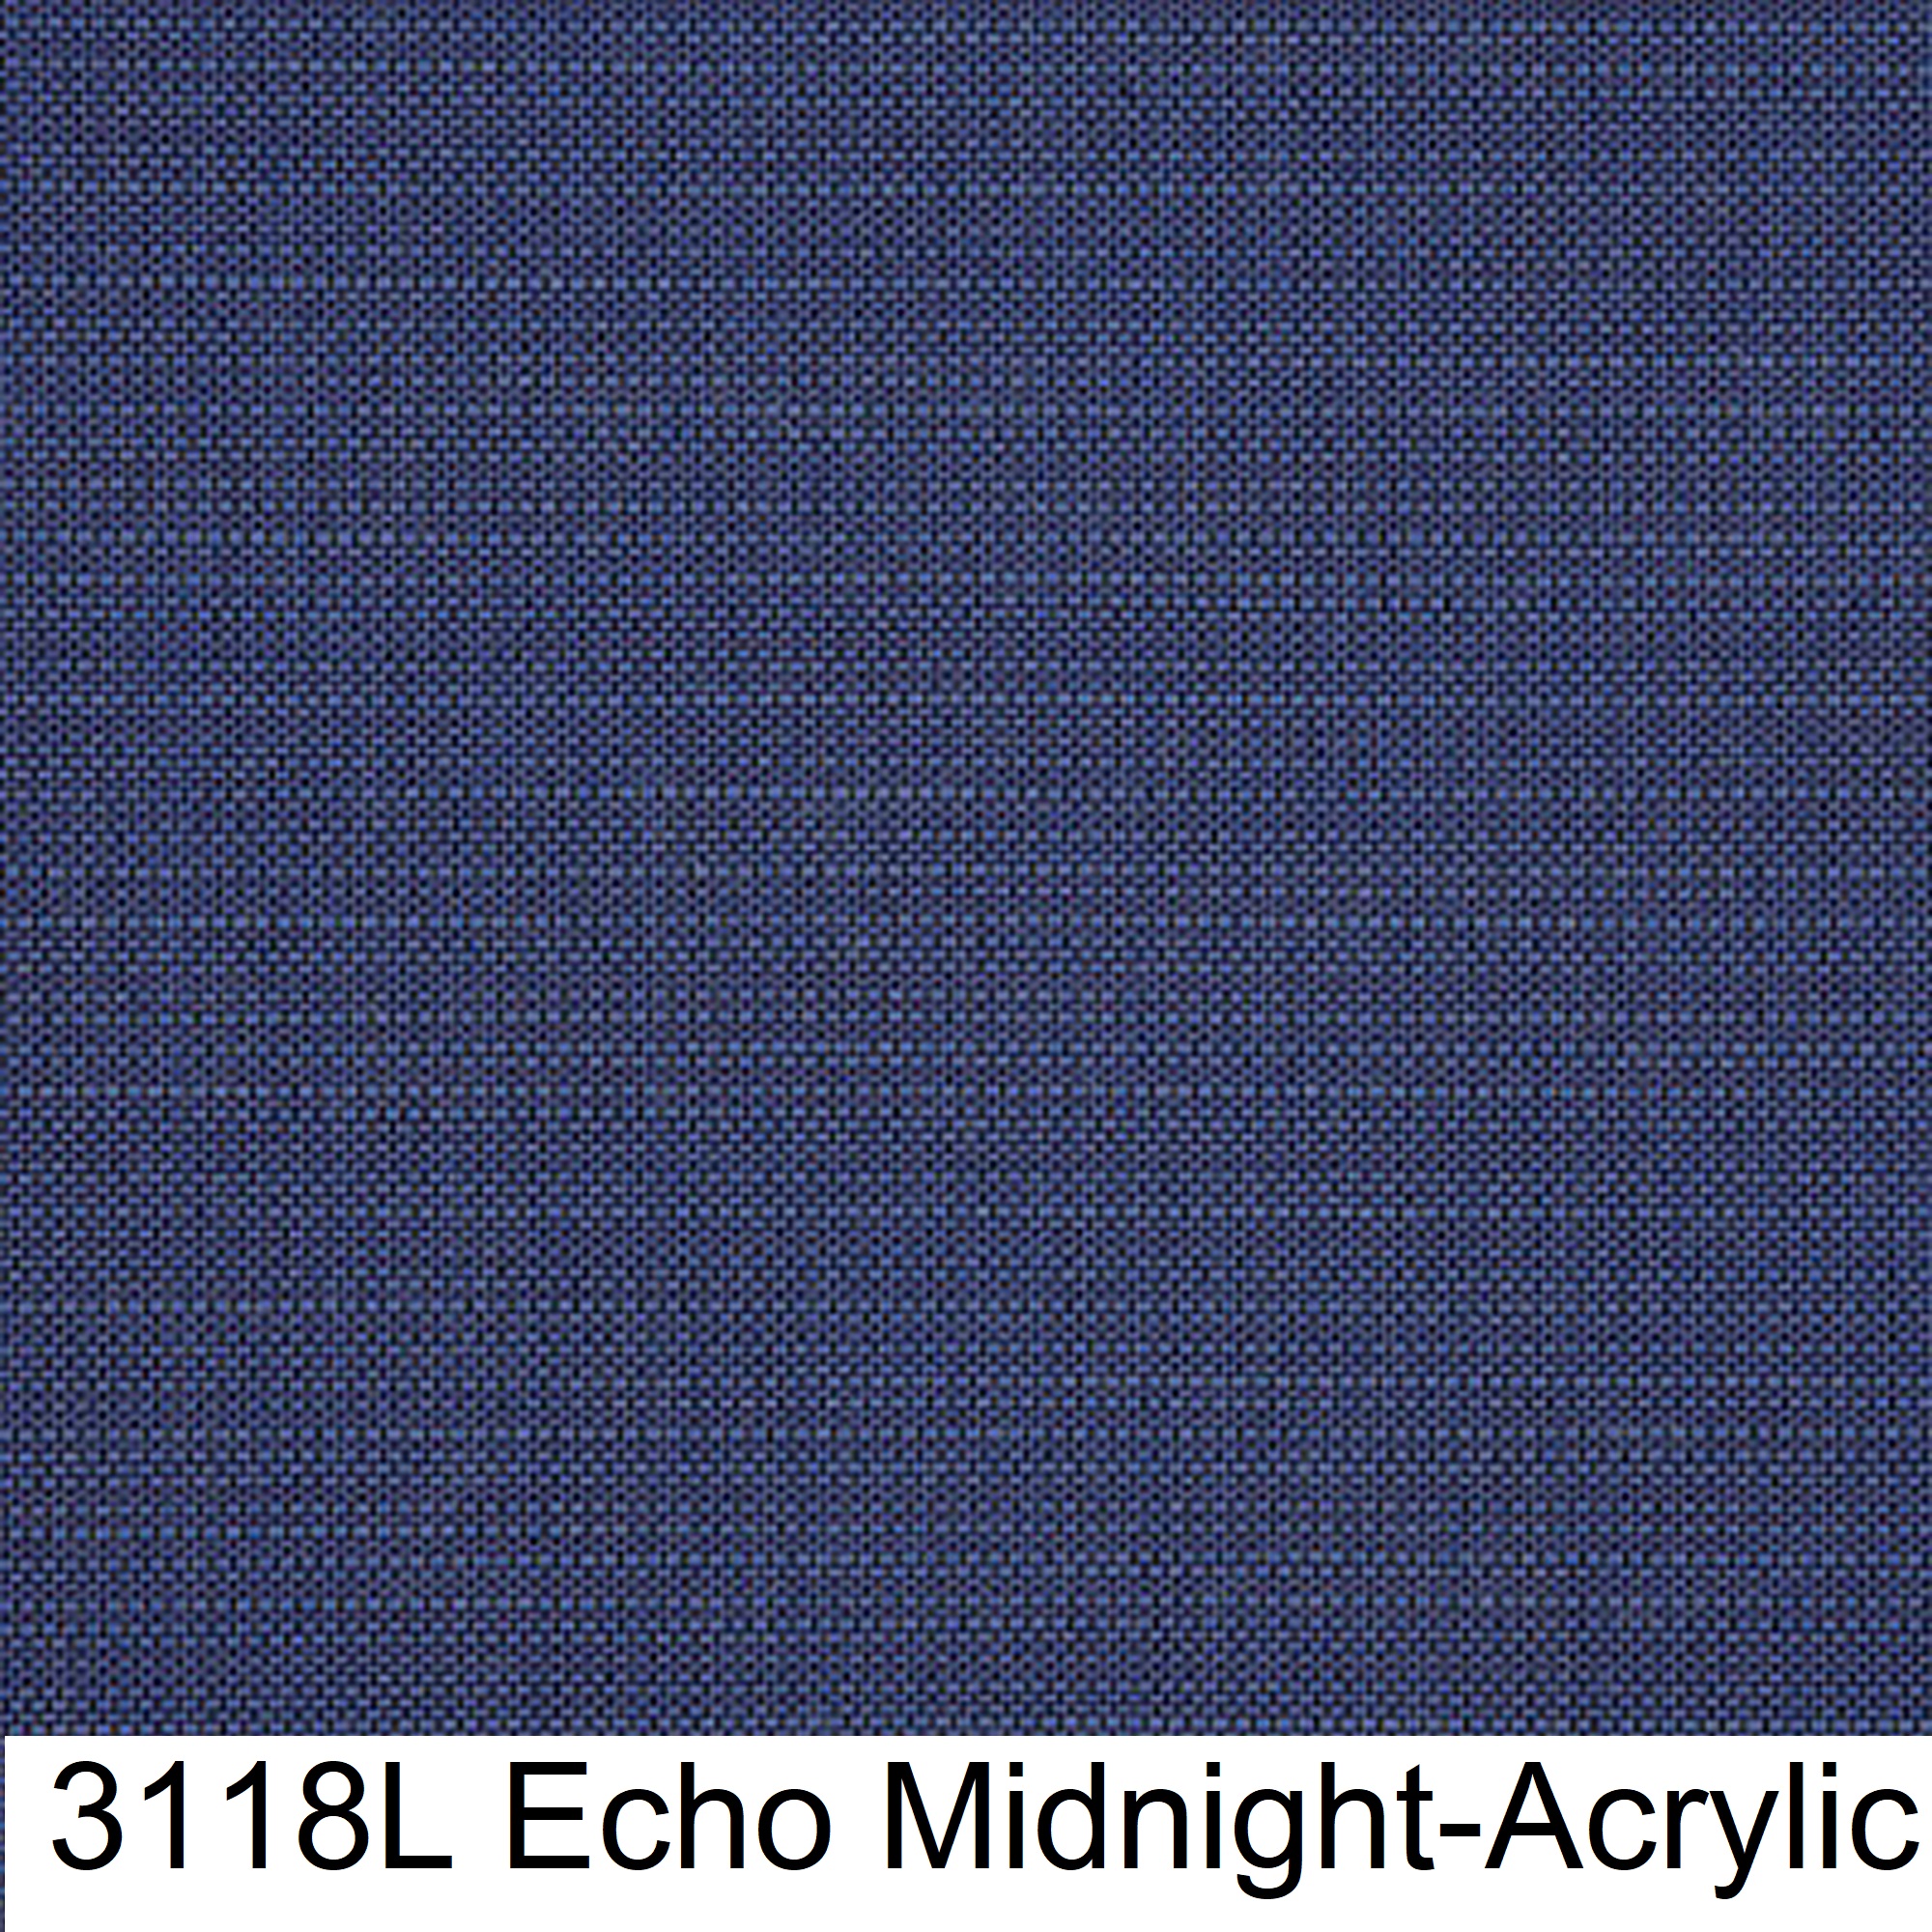 3118L Echo Midnight-Acrylic